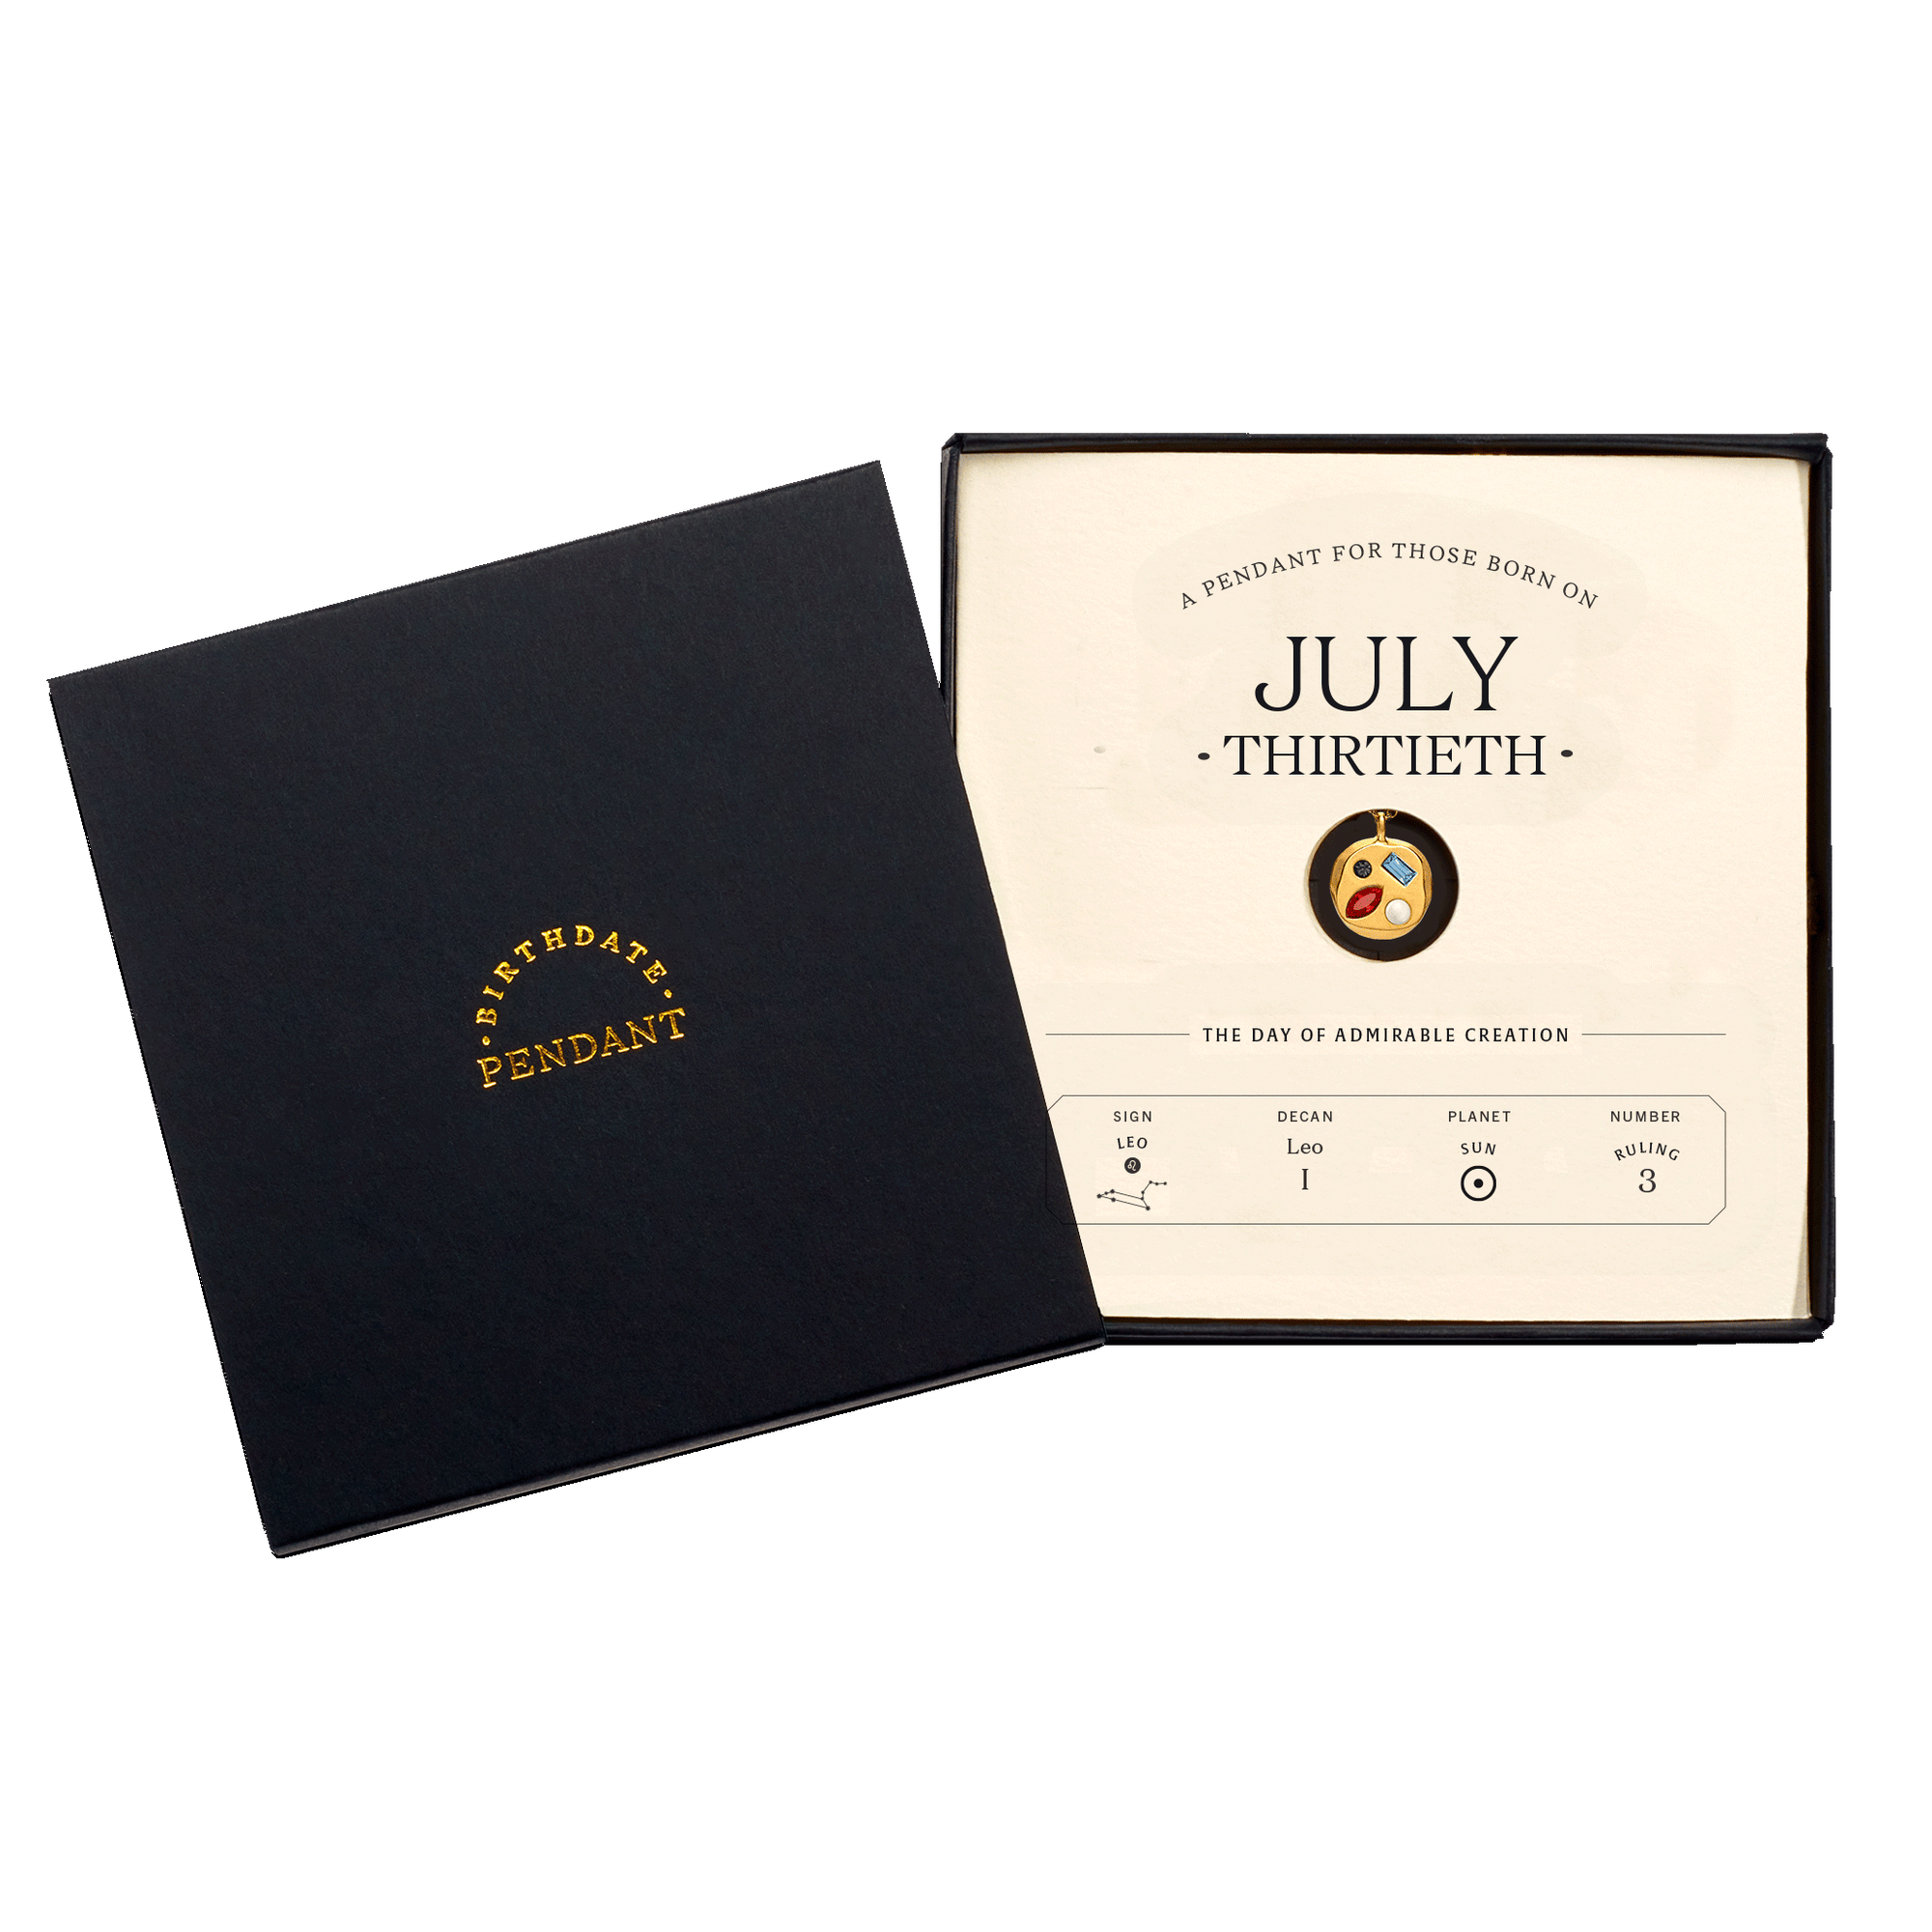 The July Thirtieth Pendant inside its box